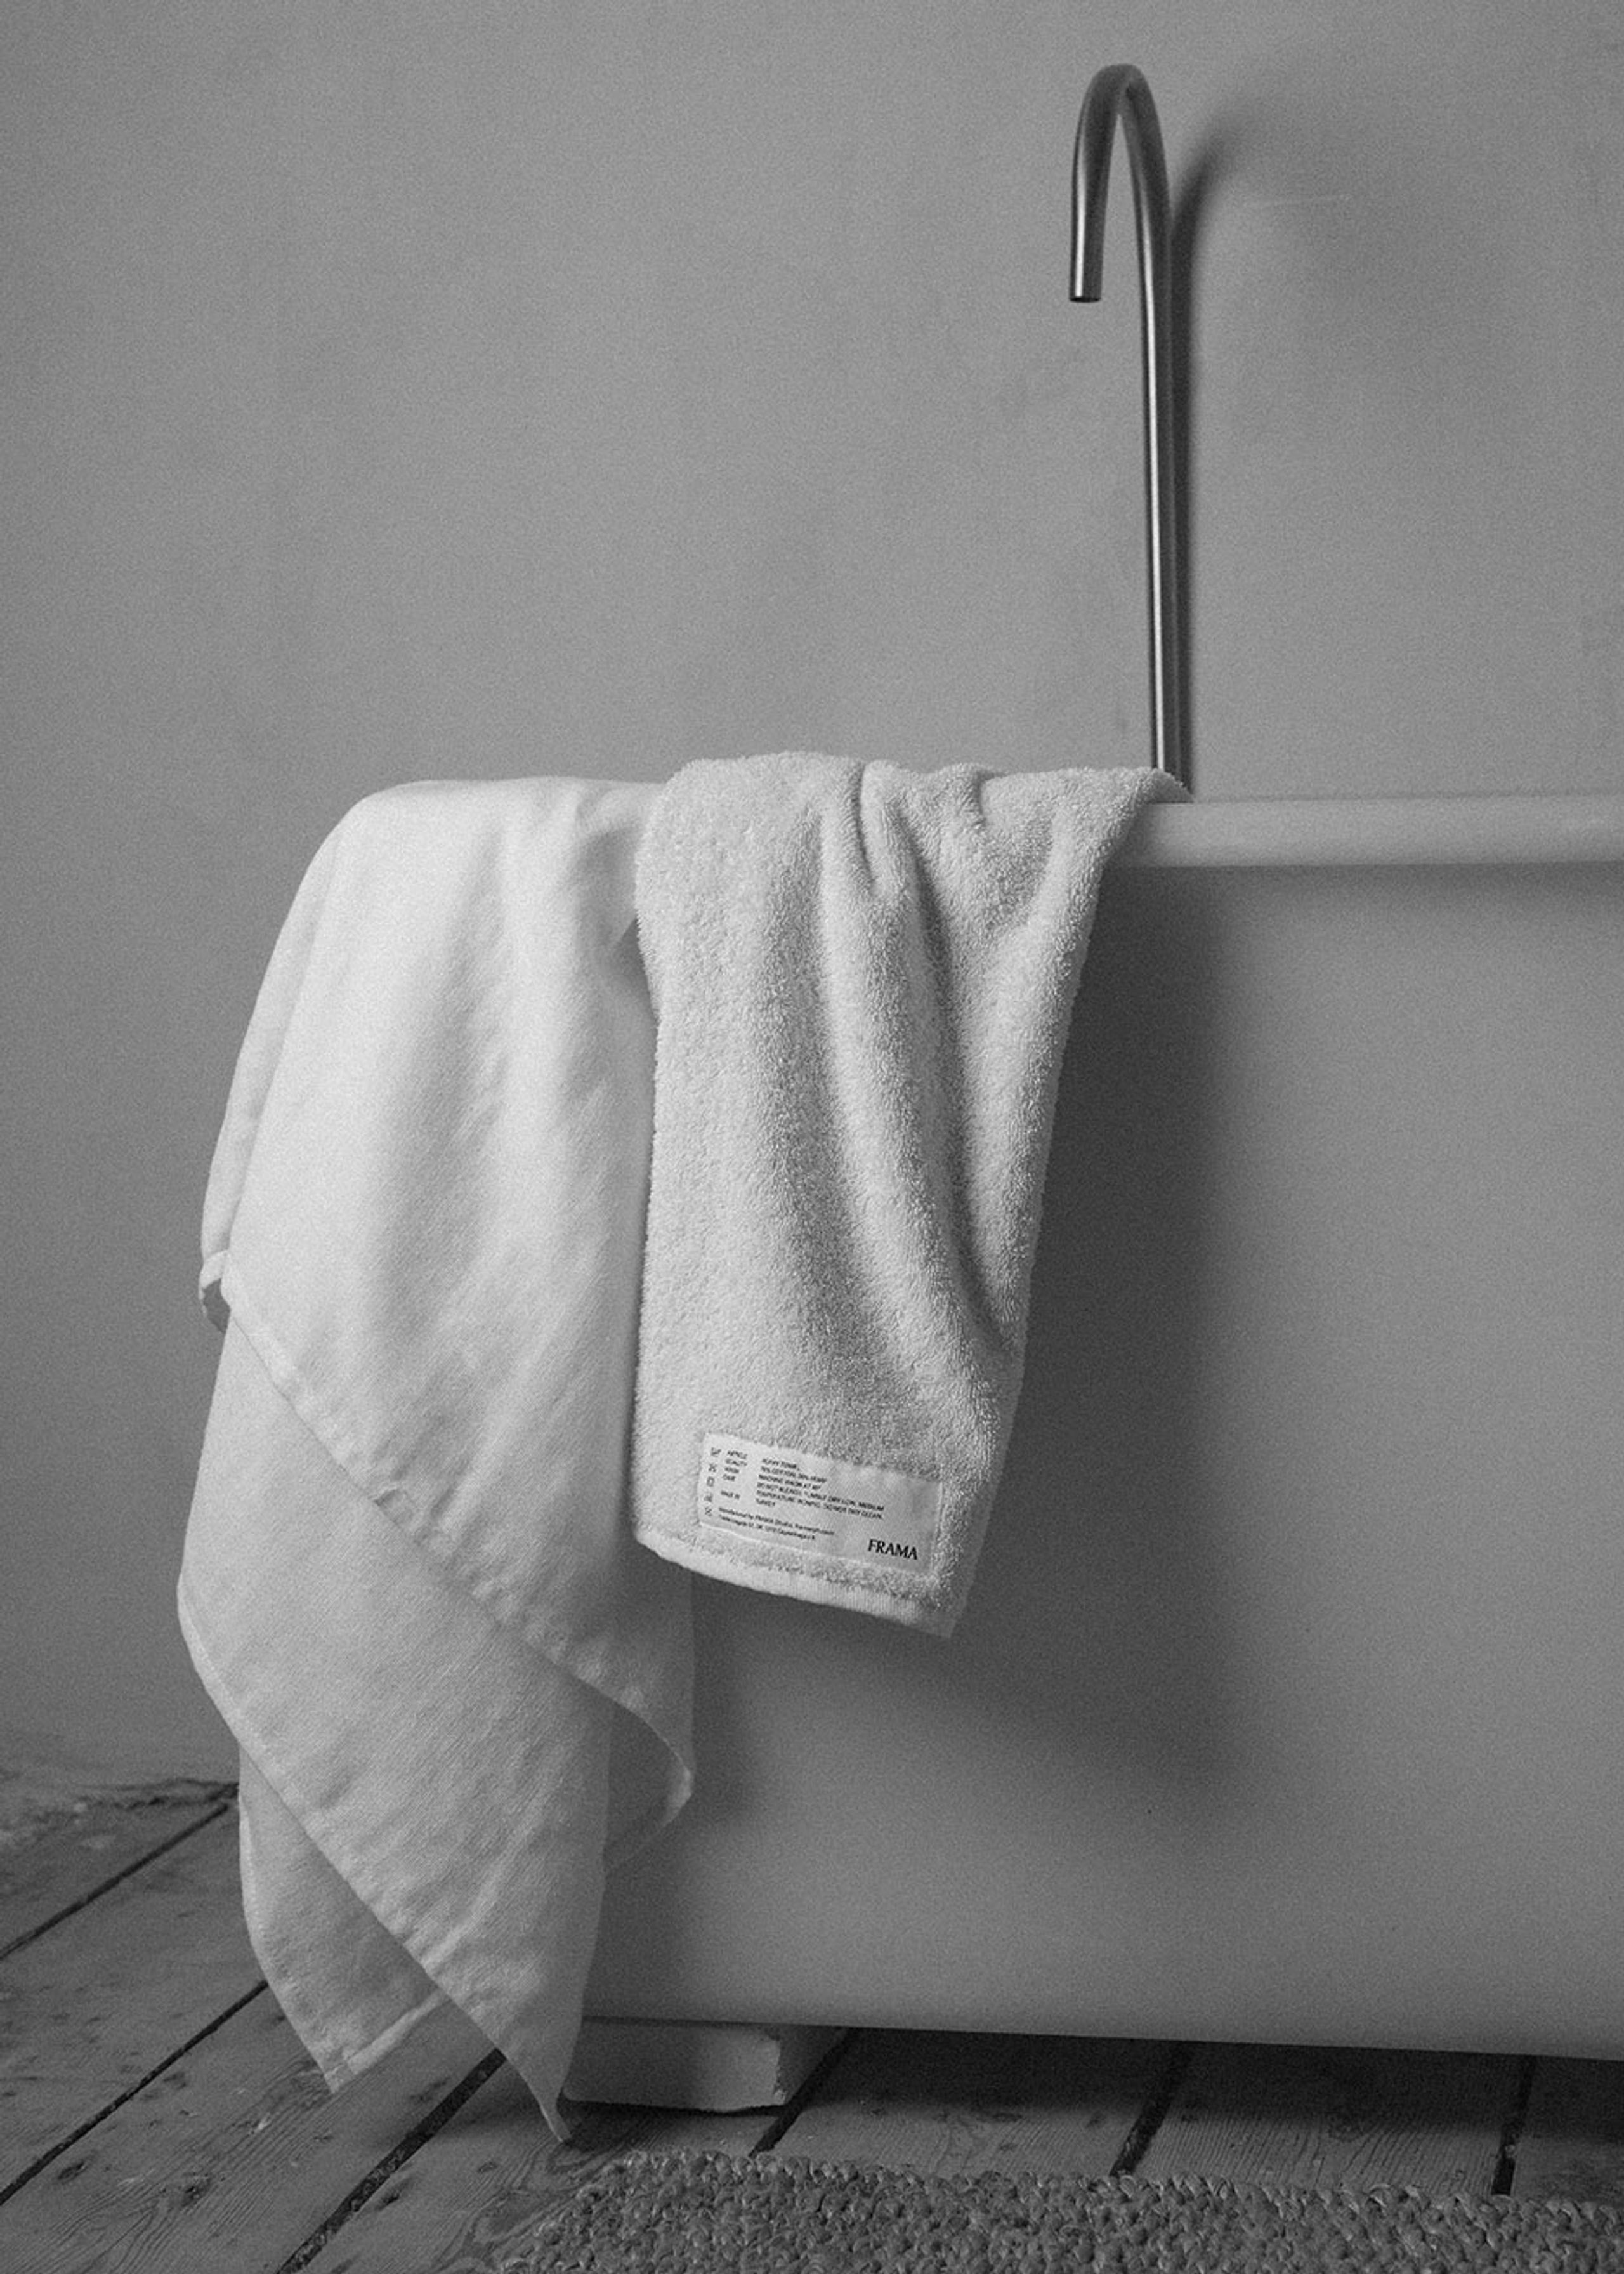 https://images.byflou.com/13/3/images/products/0/0/frama-haandklaede-heavy-towels-bone-white-bath-9521740.jpeg